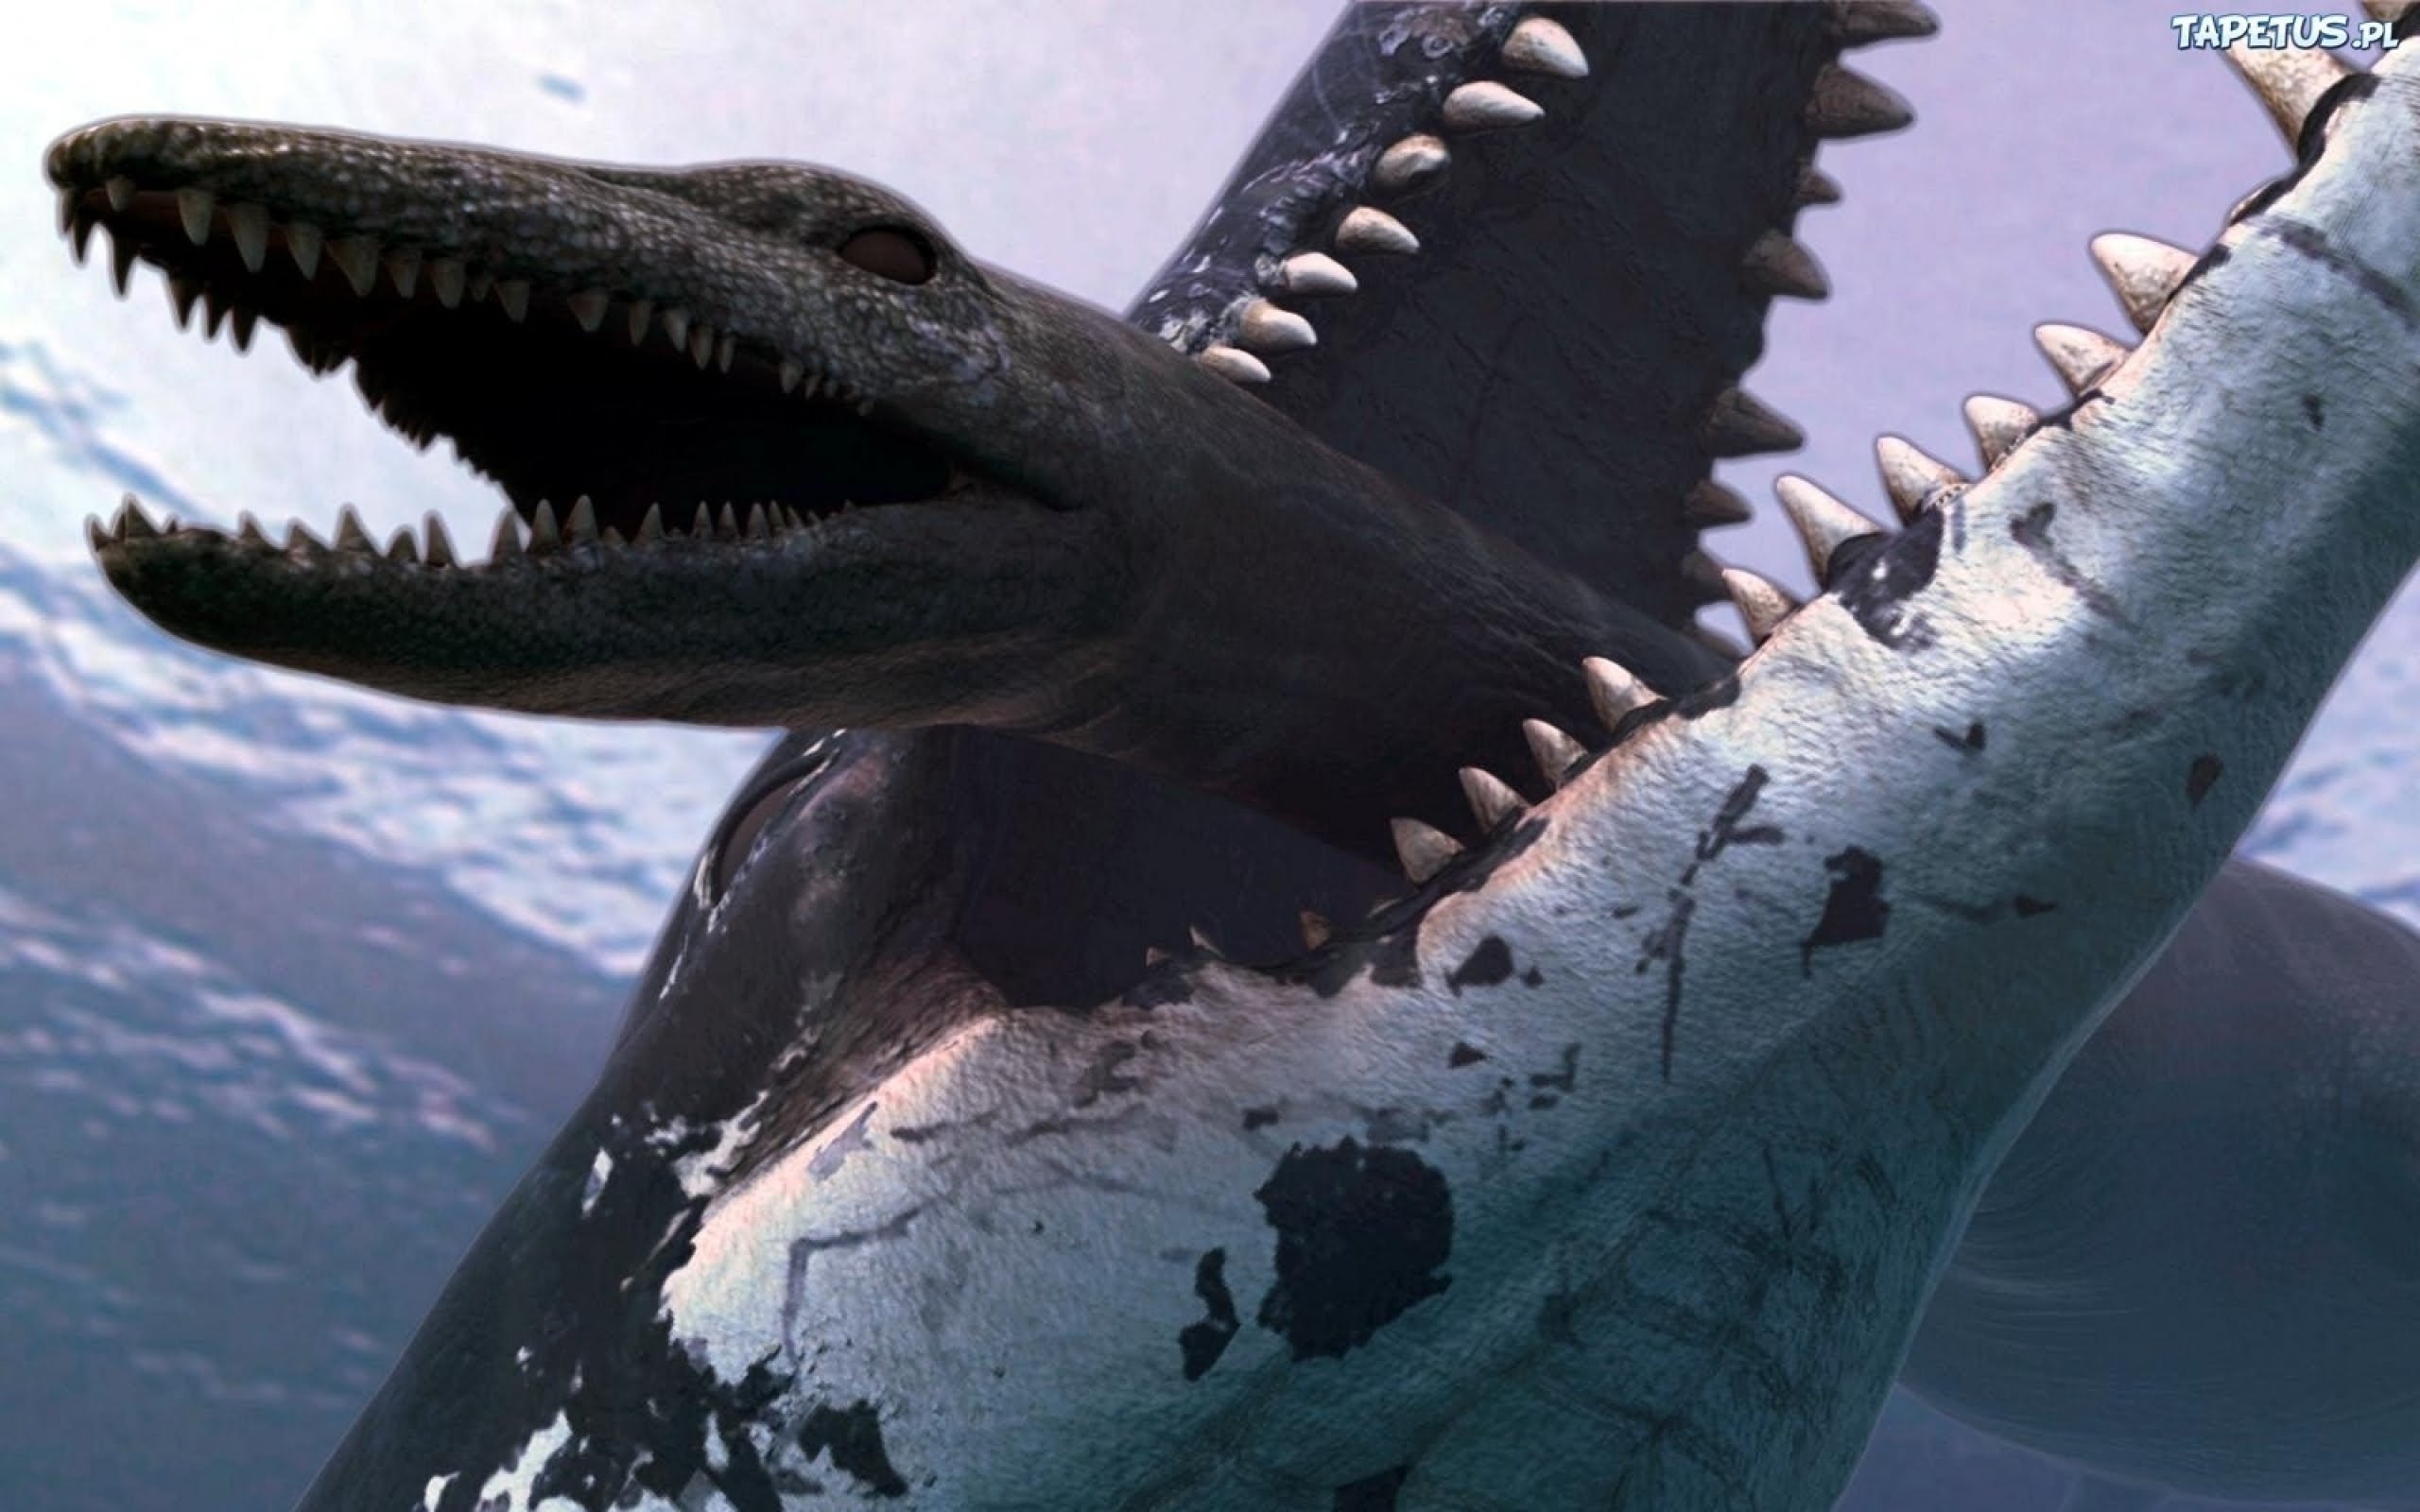 Battlefield 4 : The Megalodon shark ? Im looking for the shark